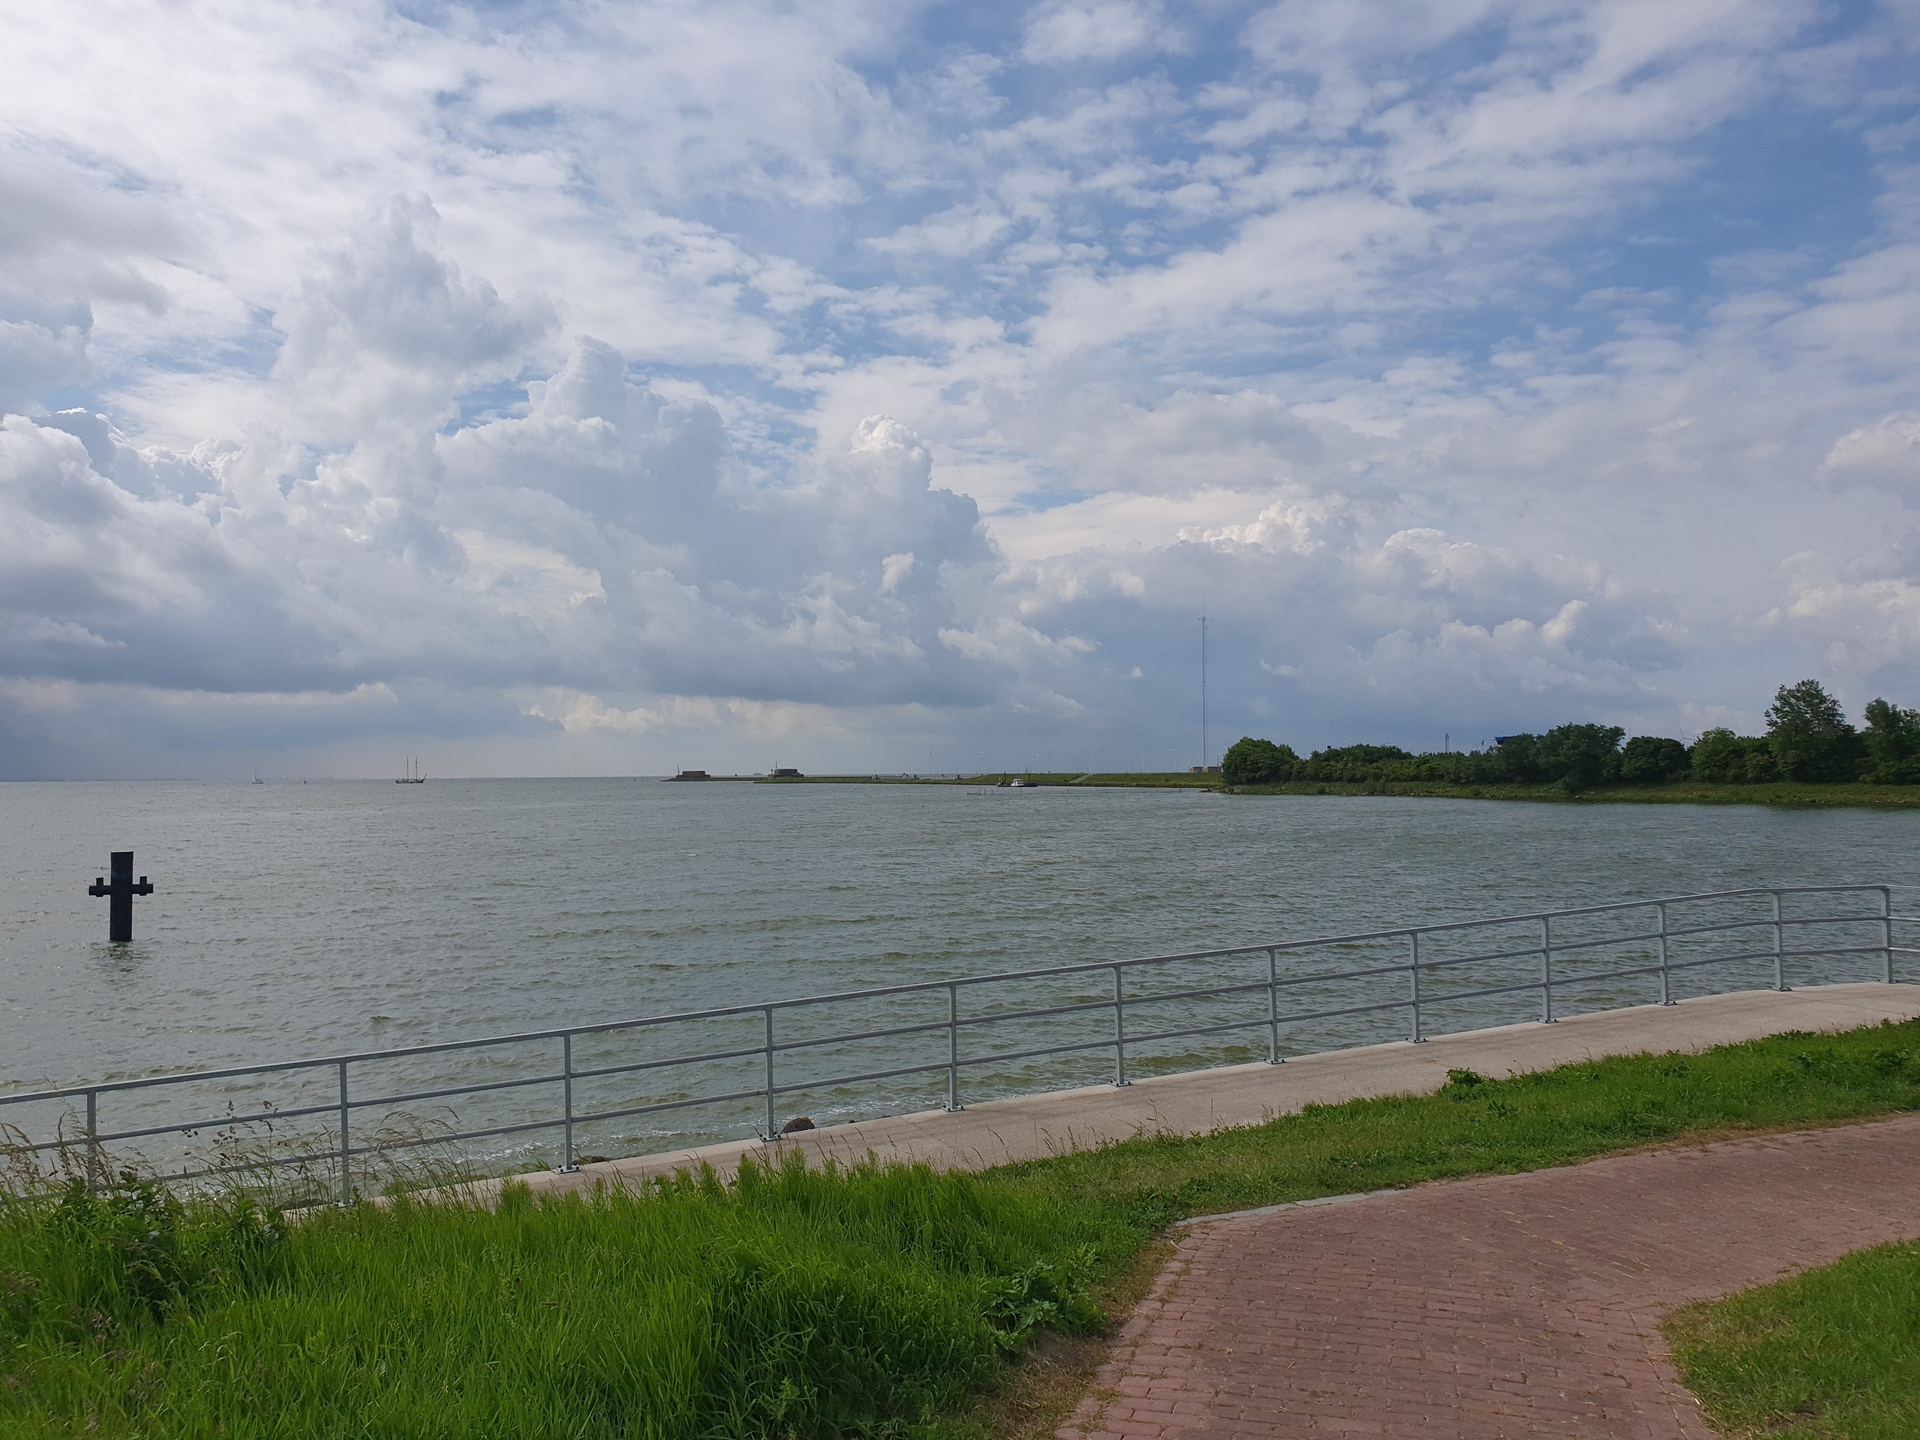 IJsselmeer at Kornwerderzand, looking right